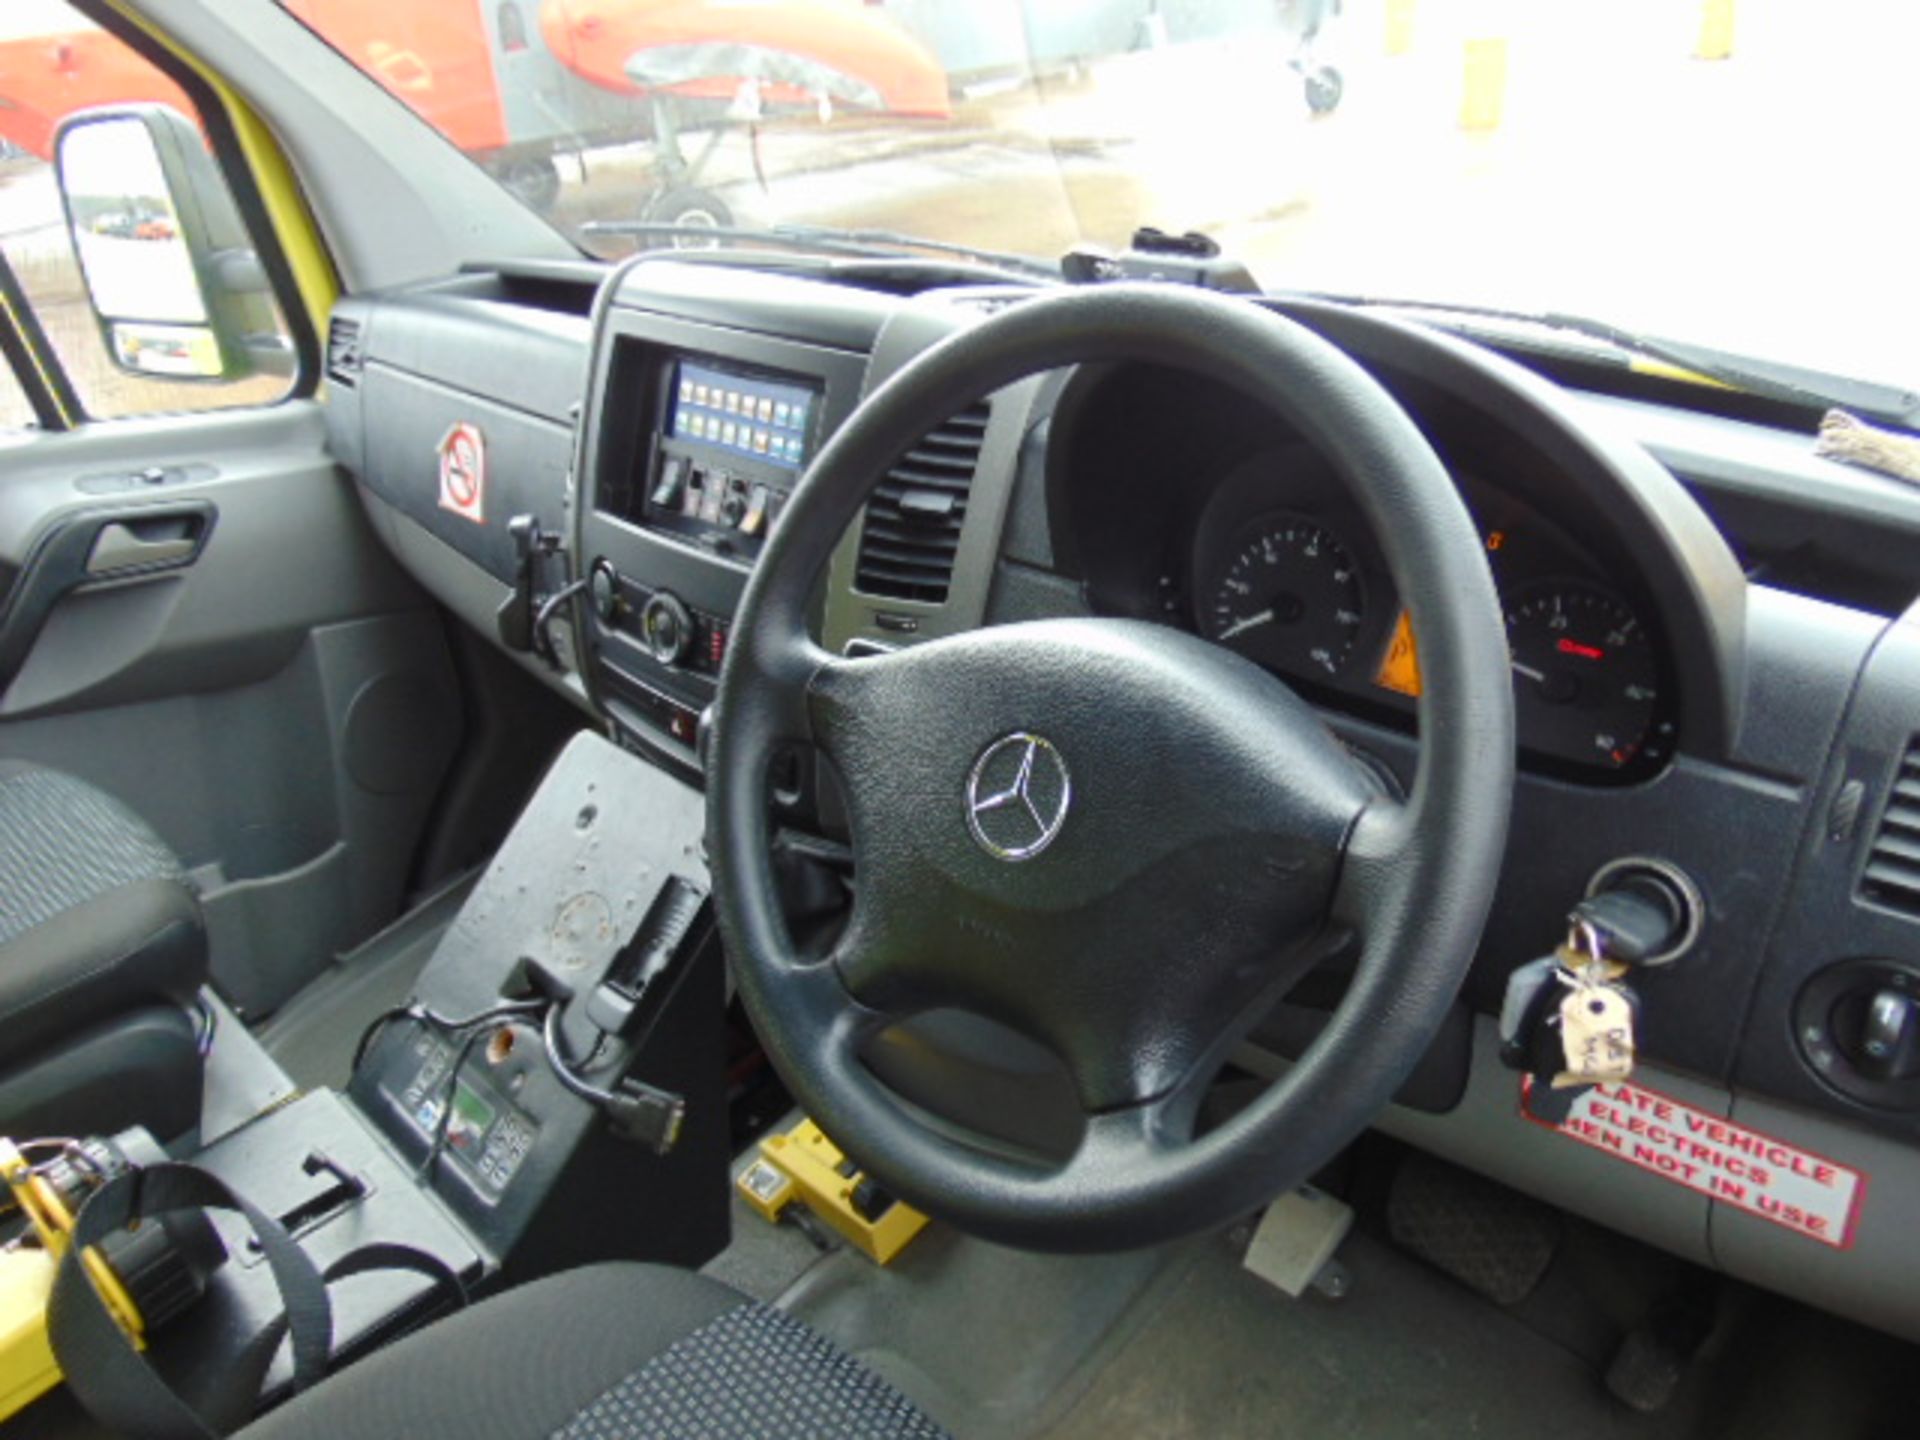 Mercedes Sprinter 515 CDI Turbo diesel ambulance - Image 10 of 18